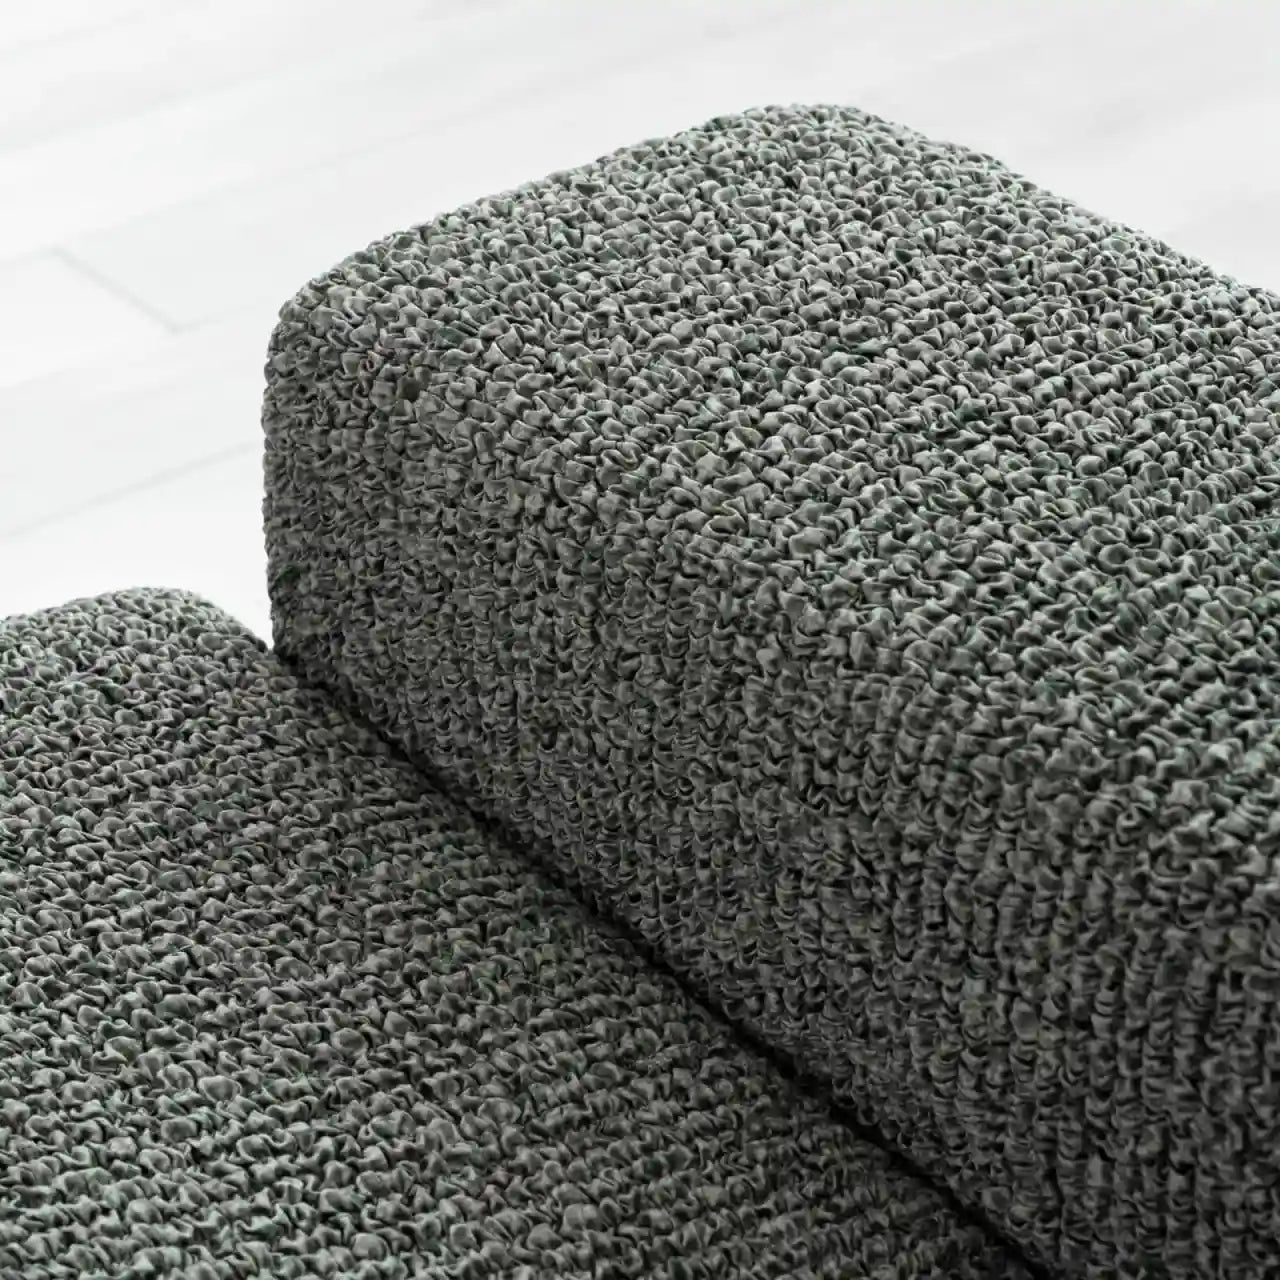 L-Shaped Sofa Cover (Right Chaise) - Vittoria Green, Microfibra Printed Collection